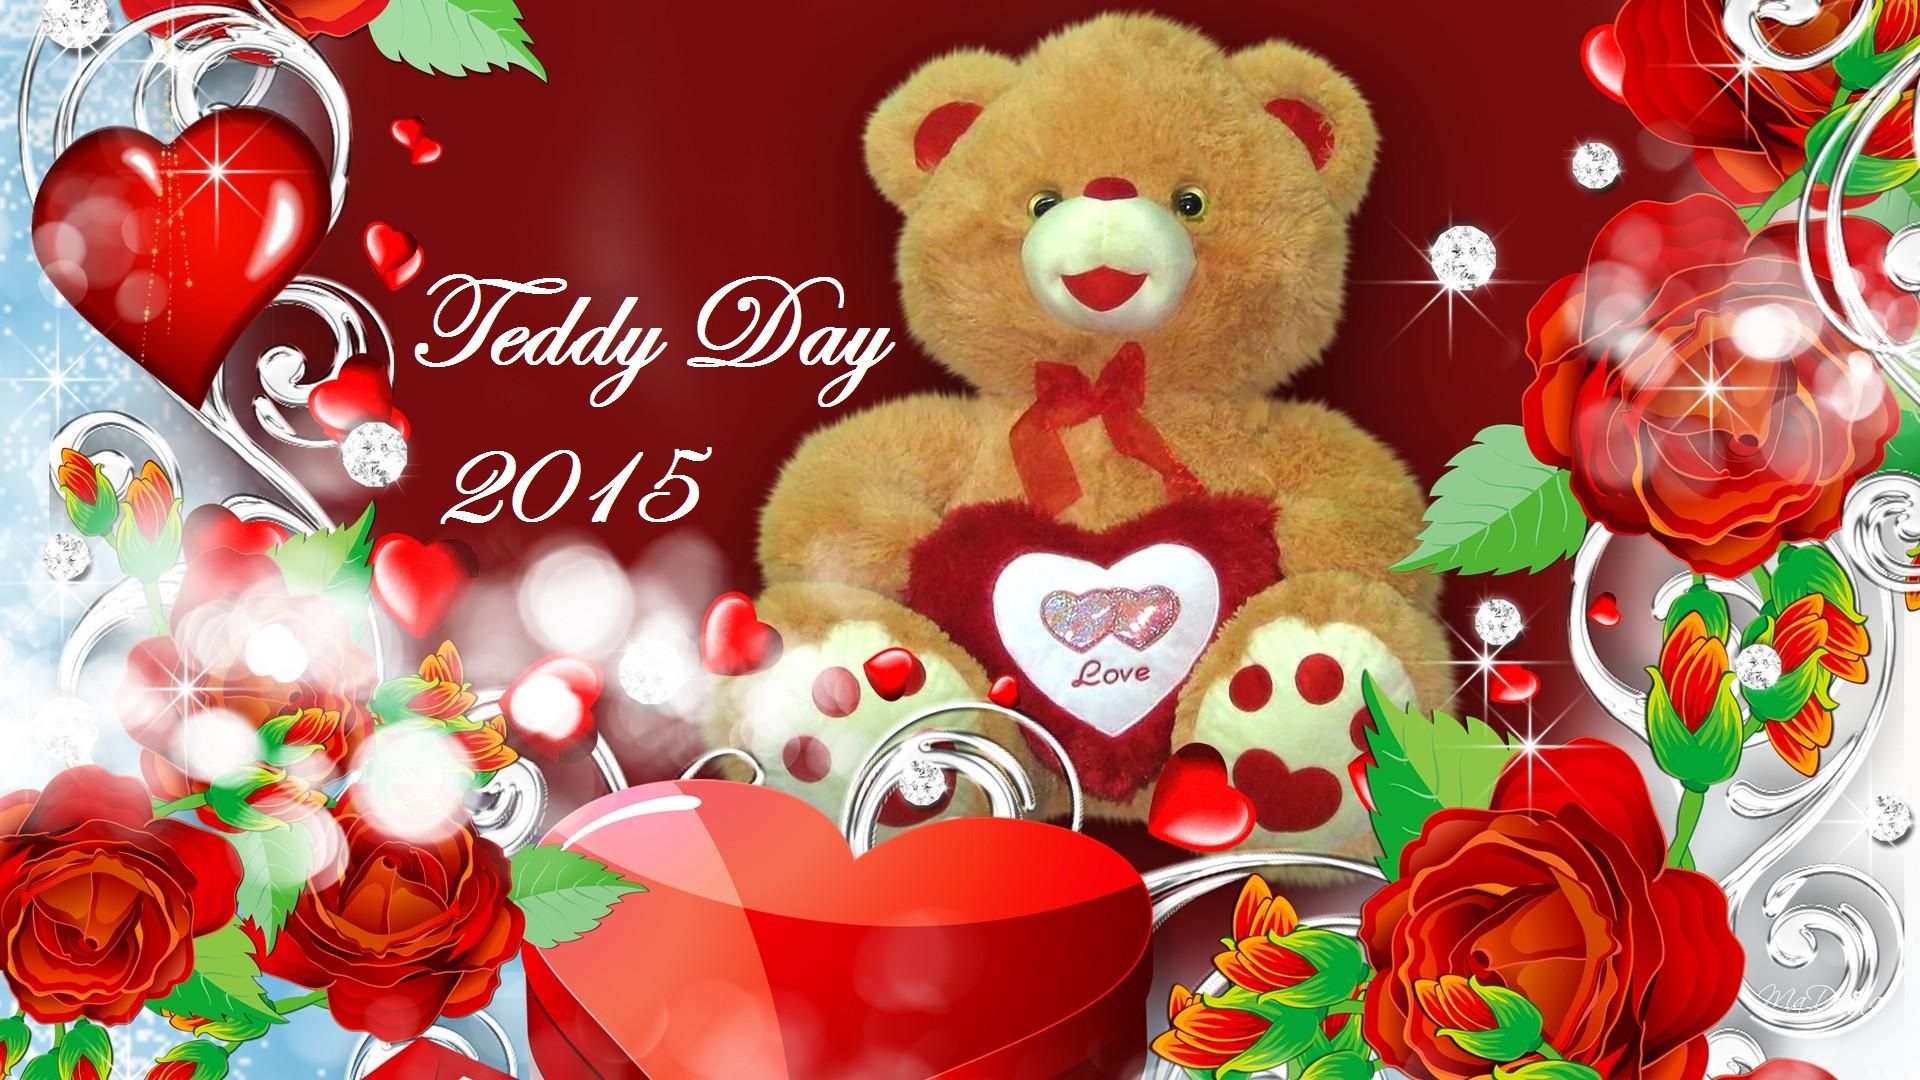 Happy Teddy Day Cute Teddy Bear Image .wallpapertip.com